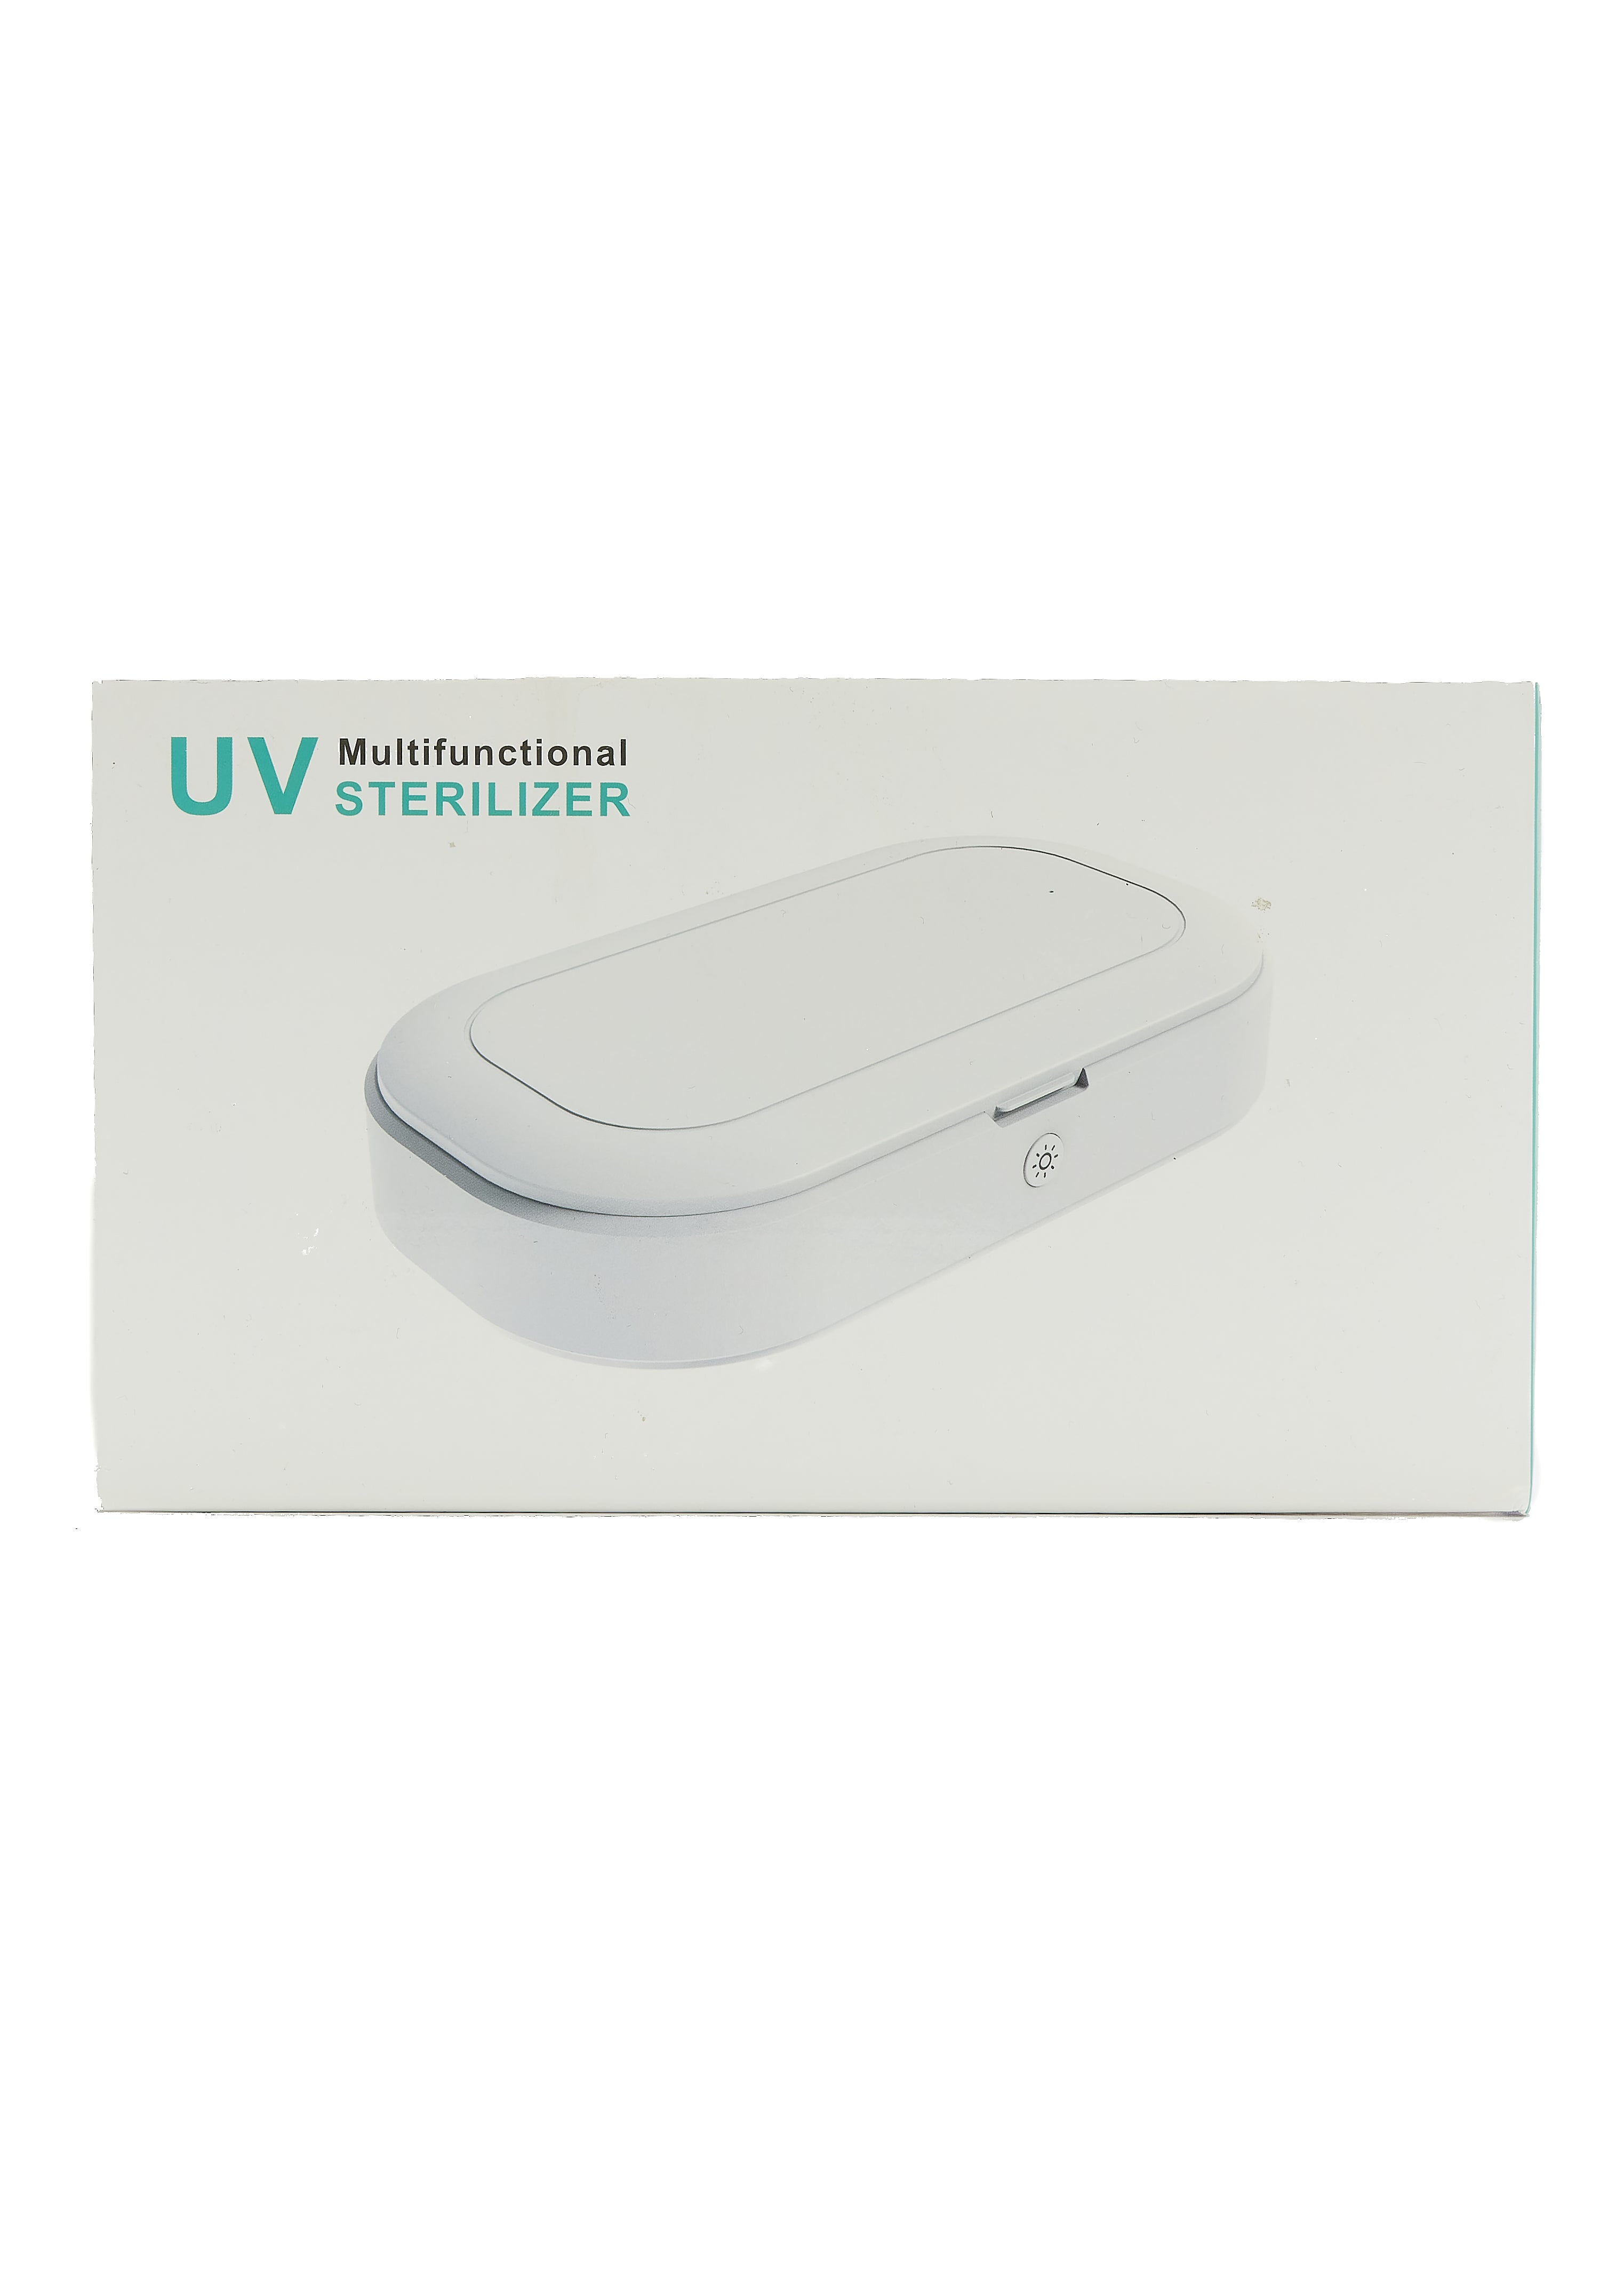 UI UV Multifunctional Sterilizer